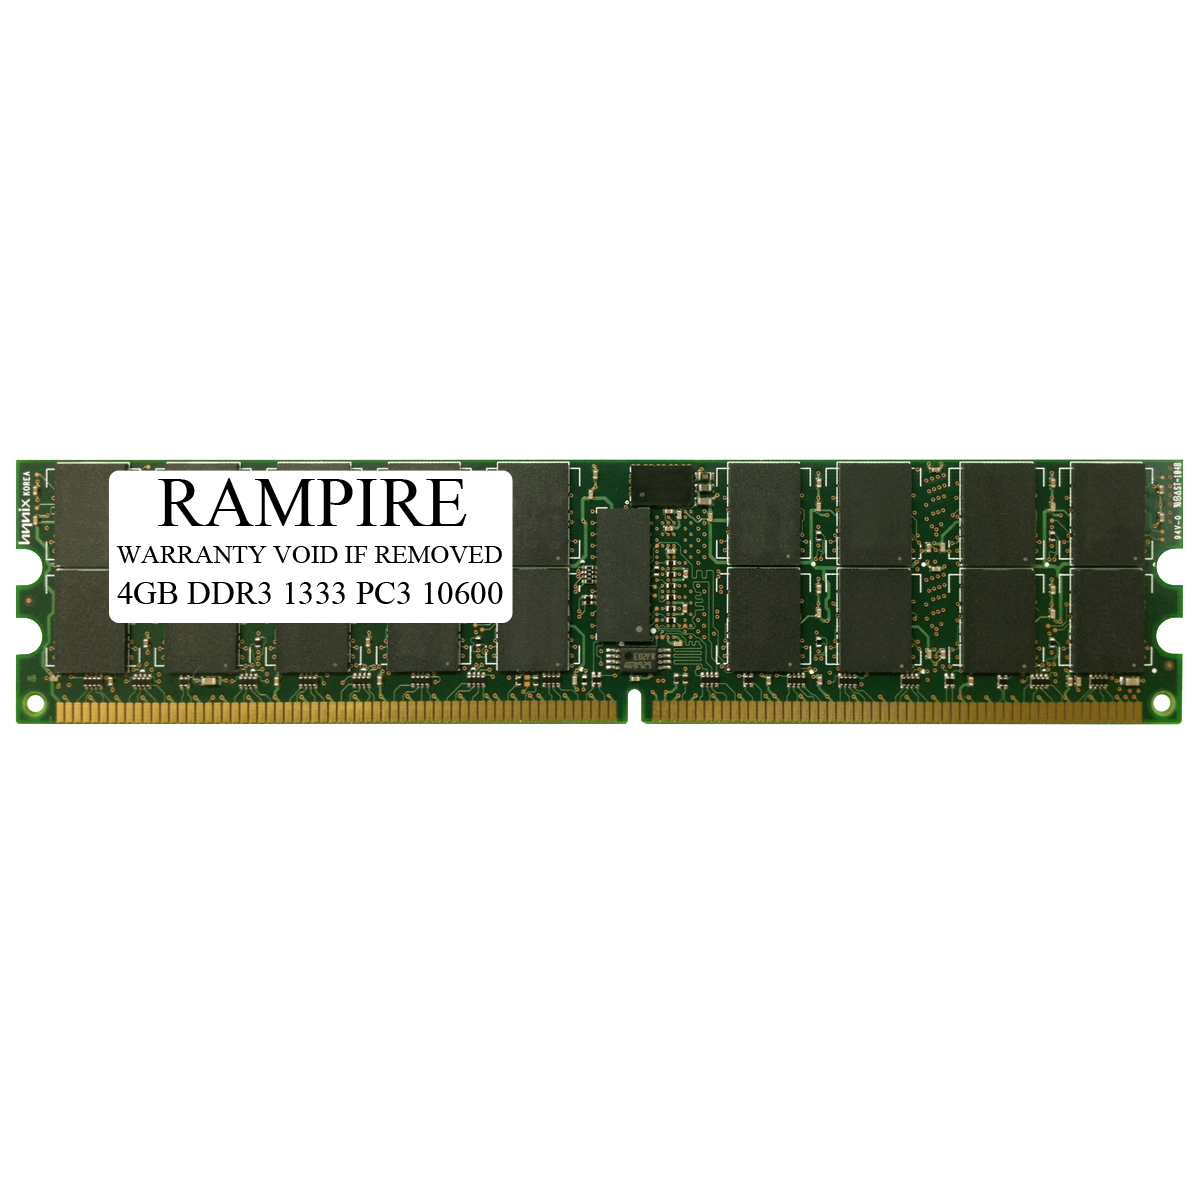 RAMPIRE 4GB DDR3 1333 (PC3 10600) 240-Pin SDRAM 1Rx4 Standard Profile 1.35V ECC Registered Server Memory